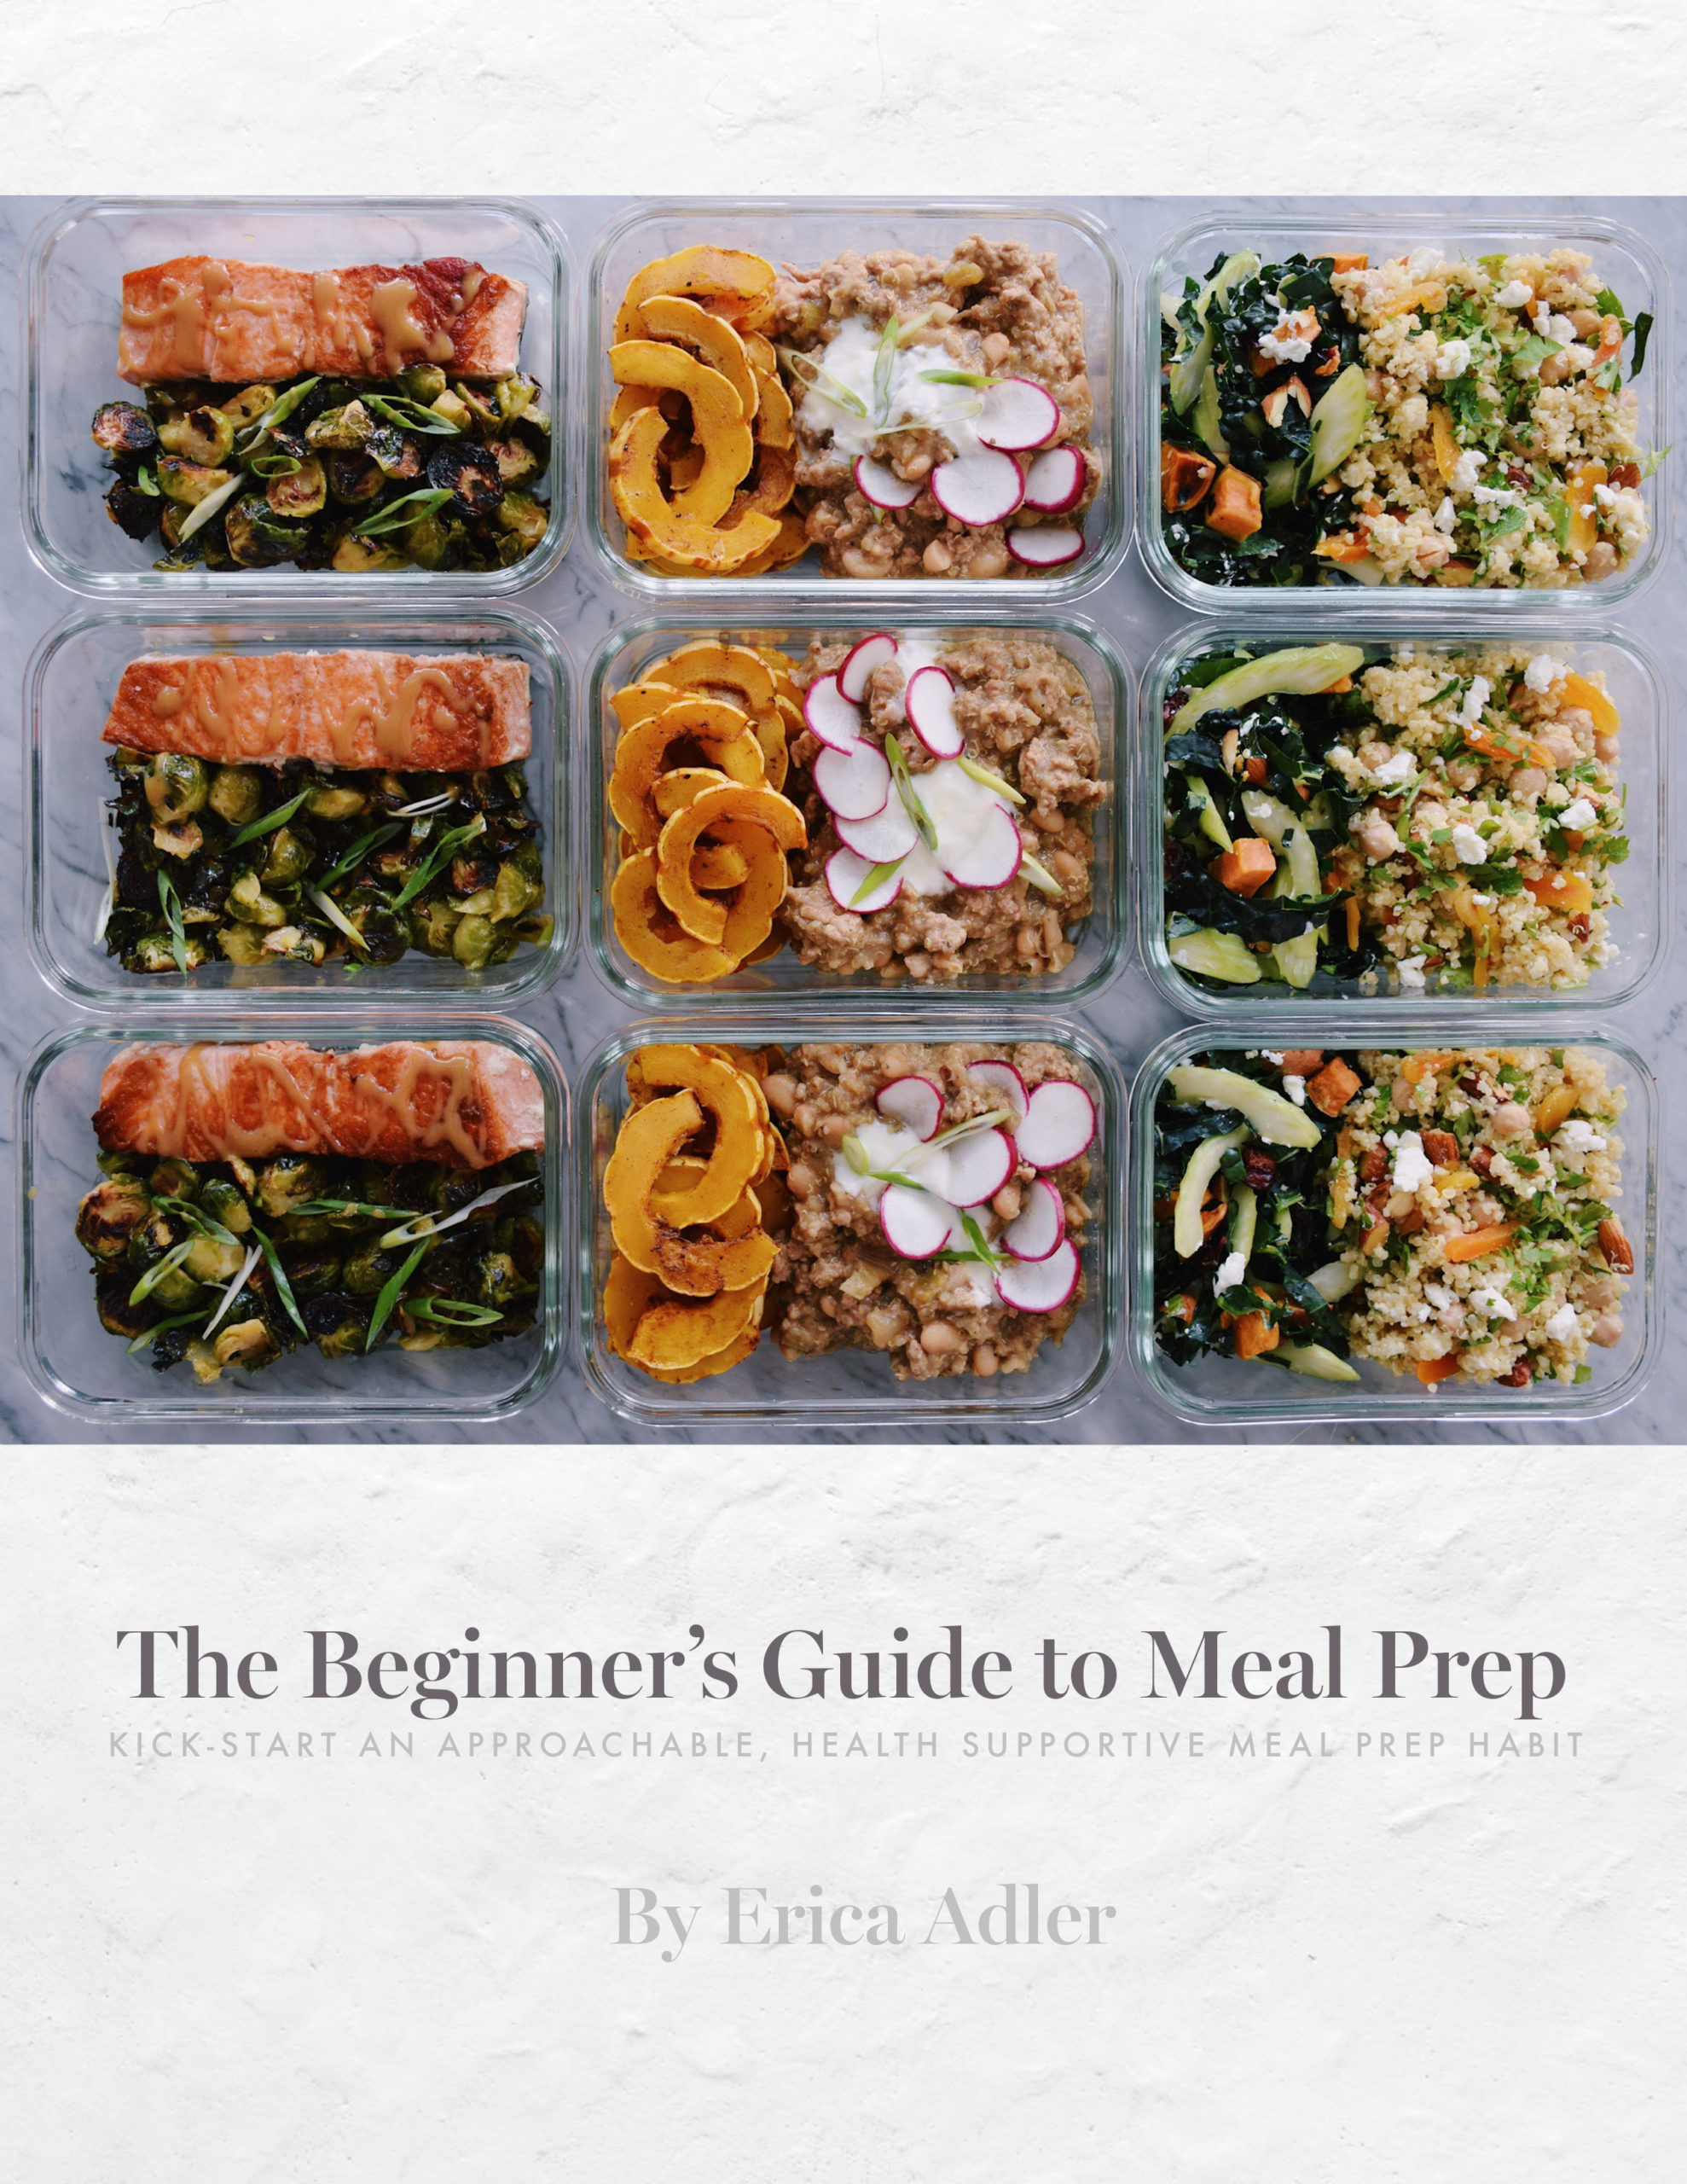 https://fresherica.com/wp-content/uploads/2019/11/Meal-Prep-E-Book-Cover-1-scaled.jpg